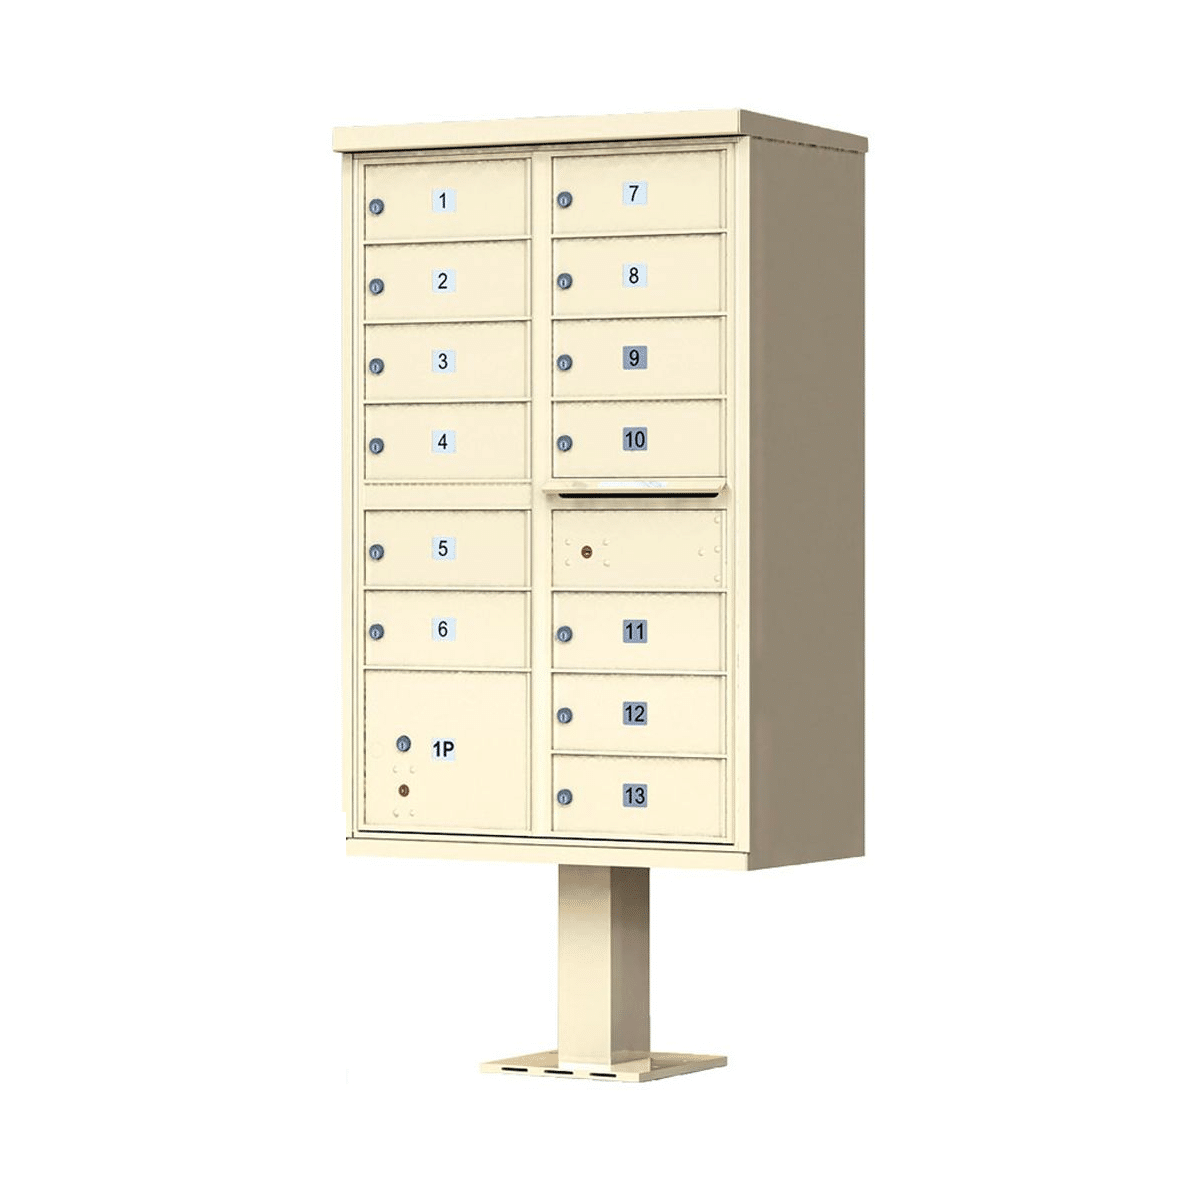 Florence CBU Cluster Mailbox – 13 Tenant Doors, 1 Parcel Locker Product Image